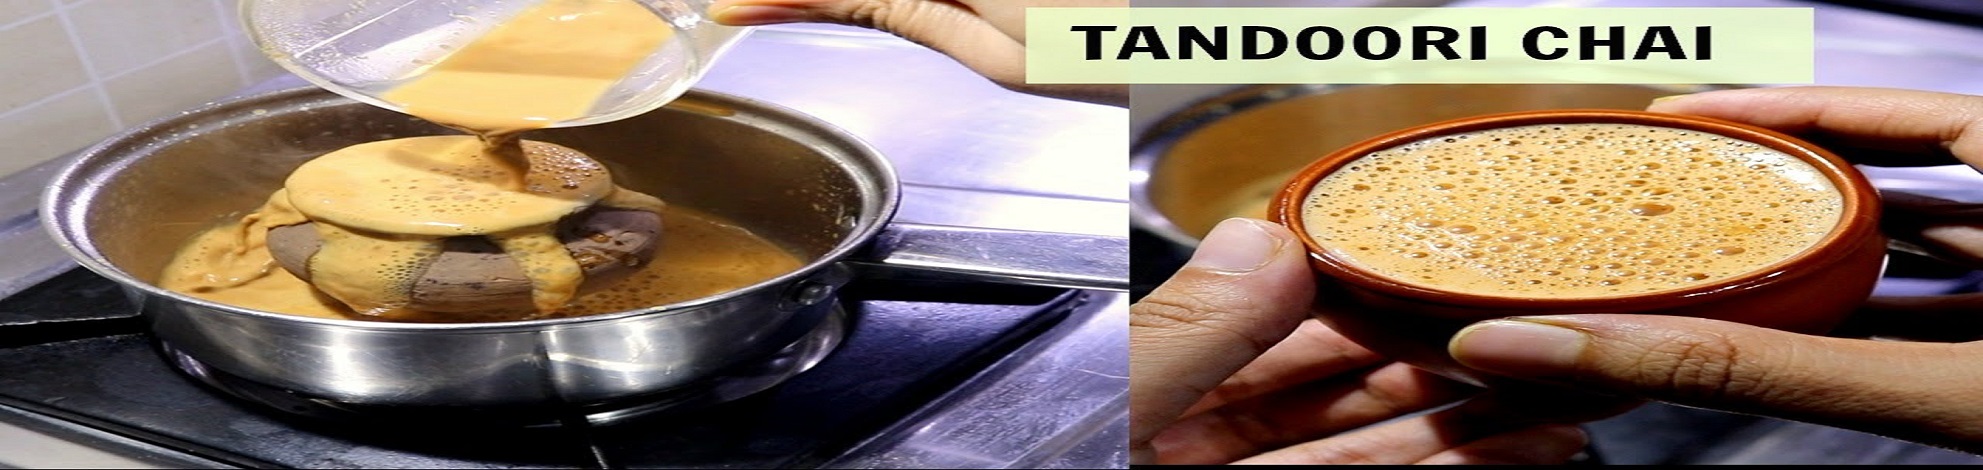 Tandorri chai